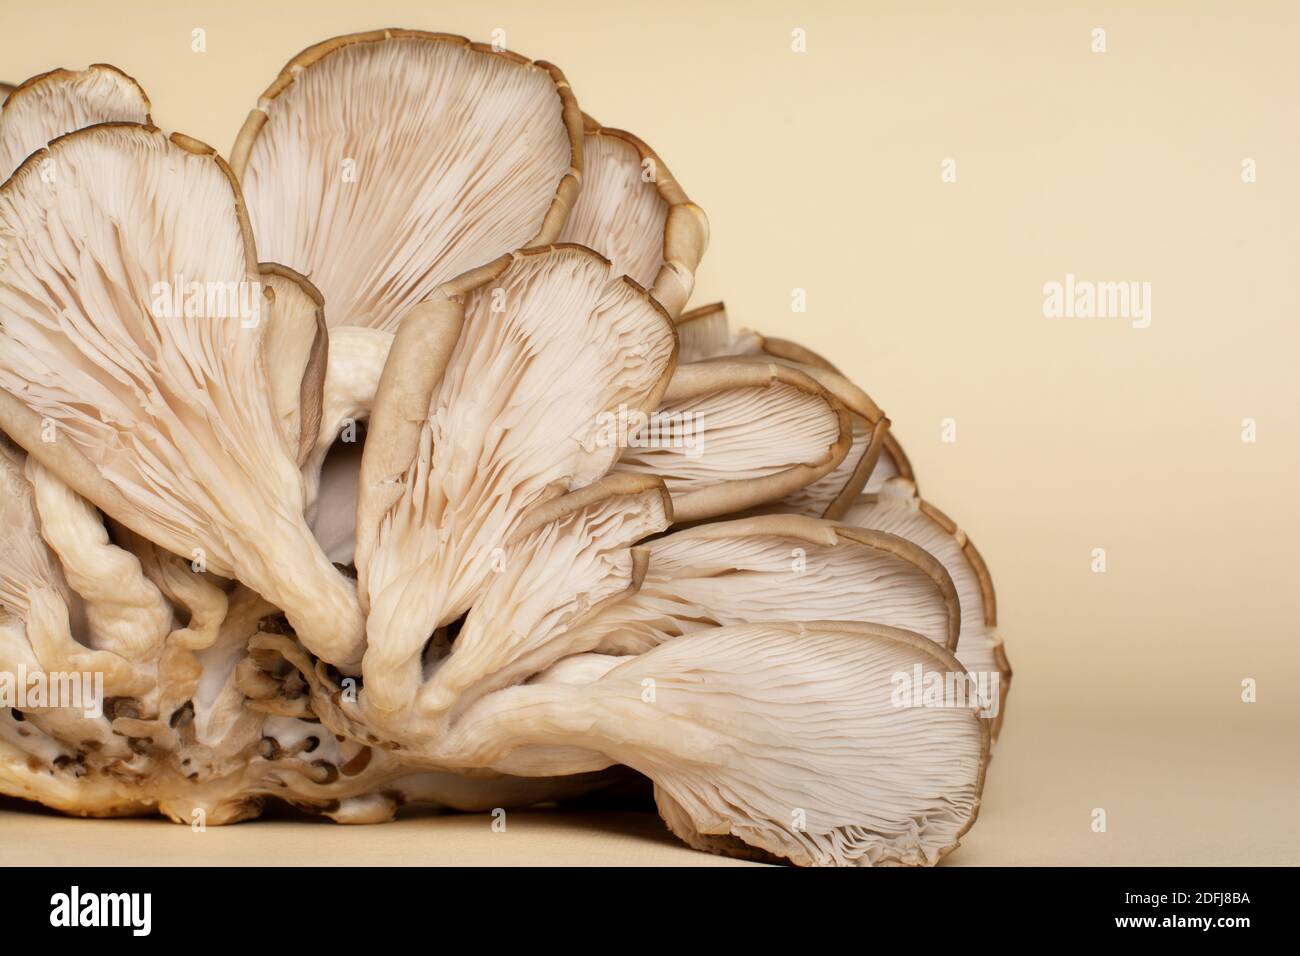 Branchie carnose e rudimentali stipes di funghi ostriche. Foto Stock